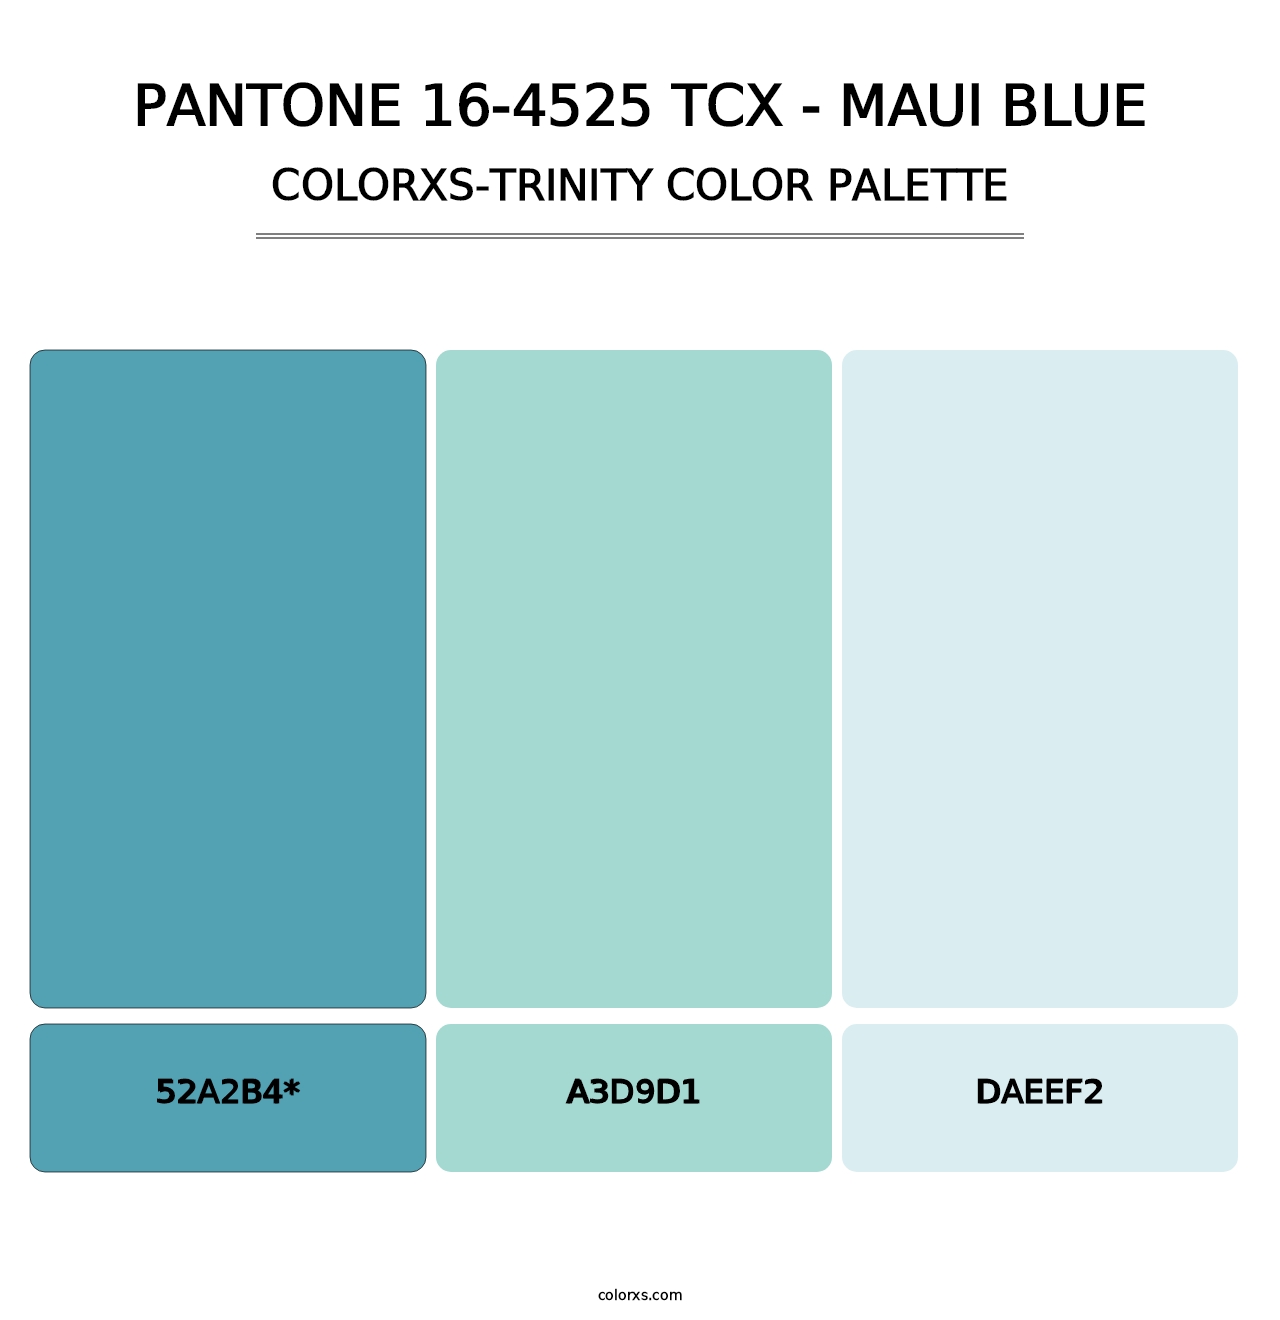 PANTONE 16-4525 TCX - Maui Blue - Colorxs Trinity Palette